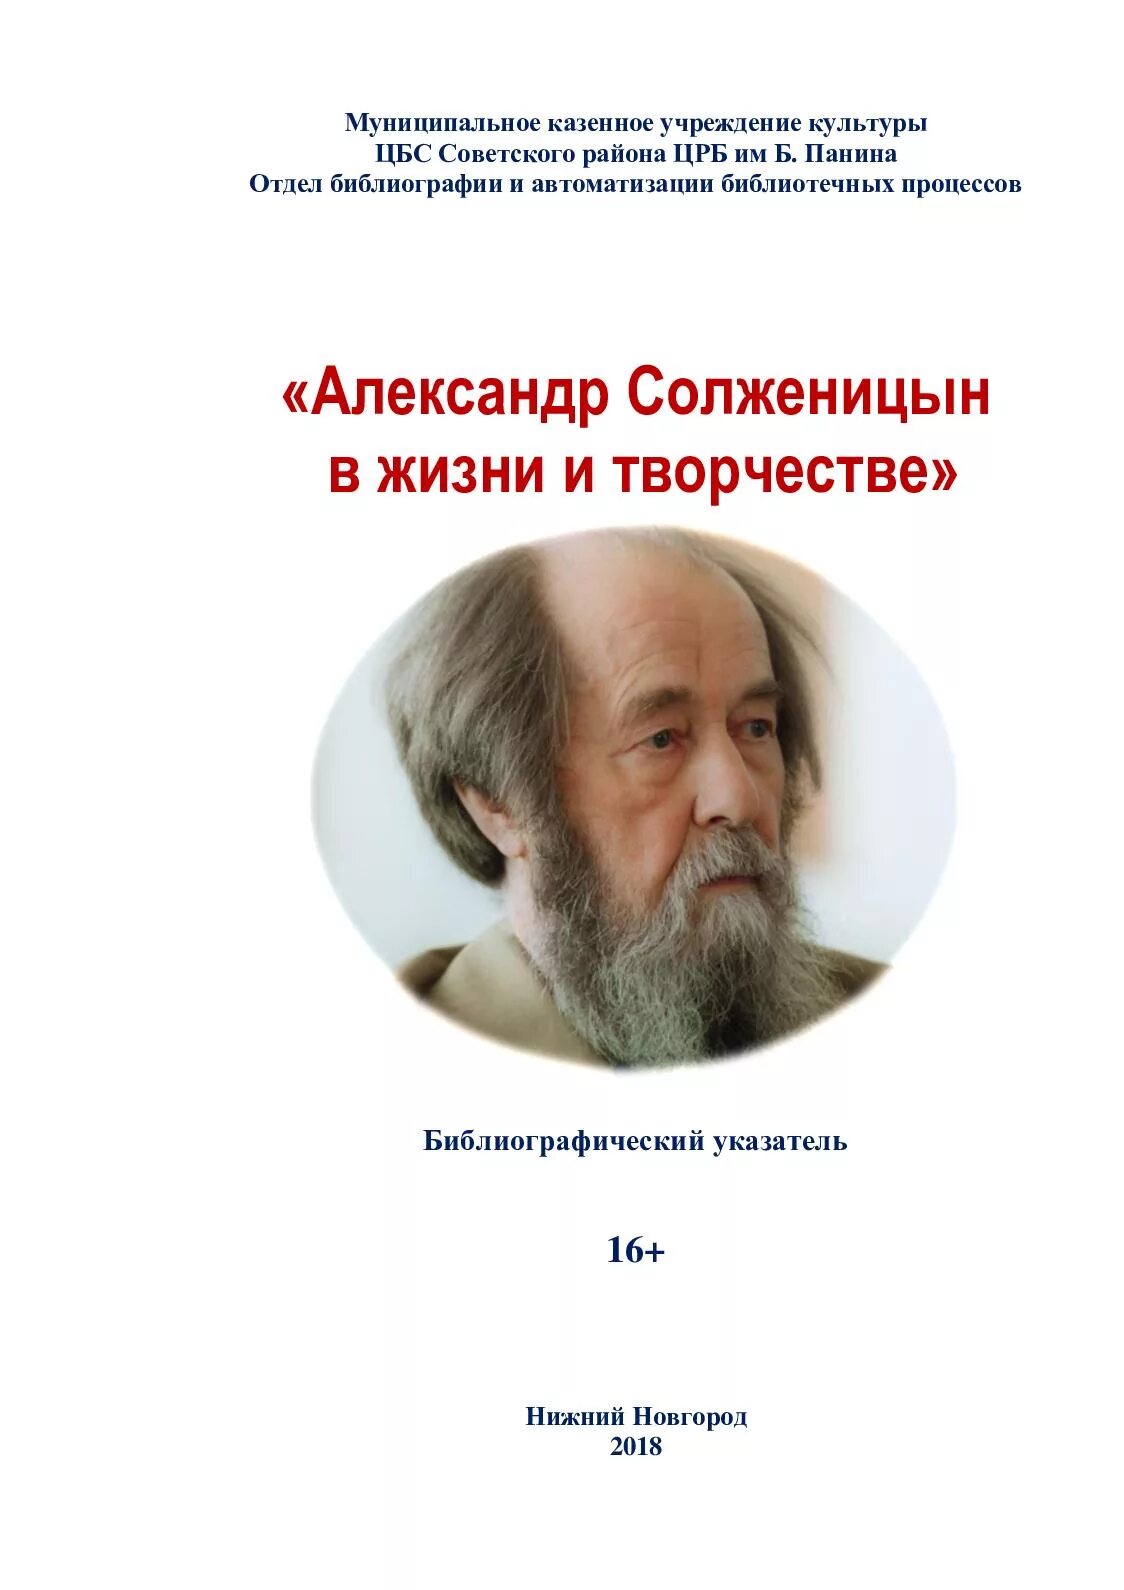 Биография солженицына по датам. Таблица Солженицын. Таблица жизнь Солженицына.